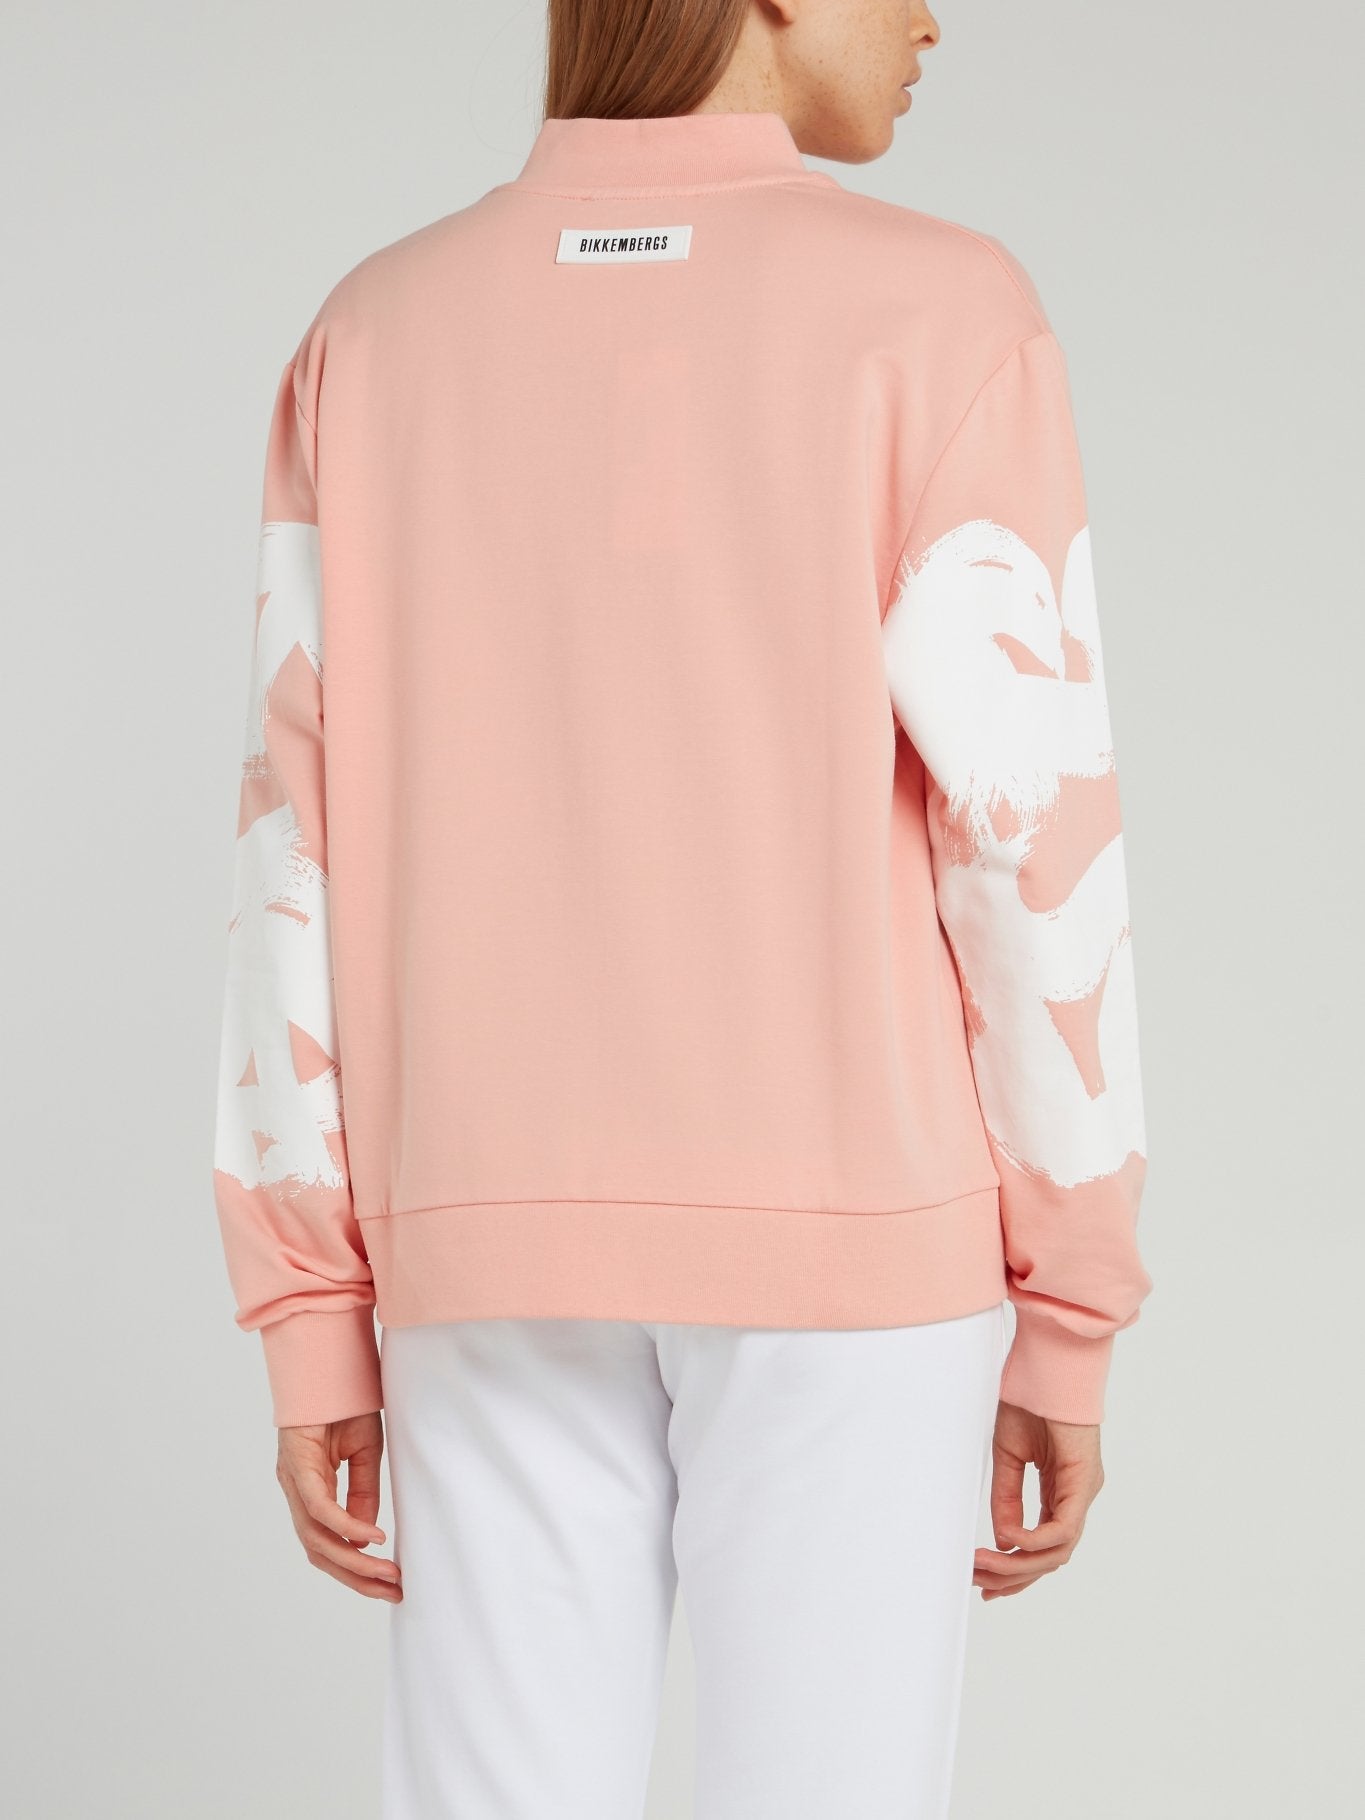 Pink Paint Print Sweatshirt